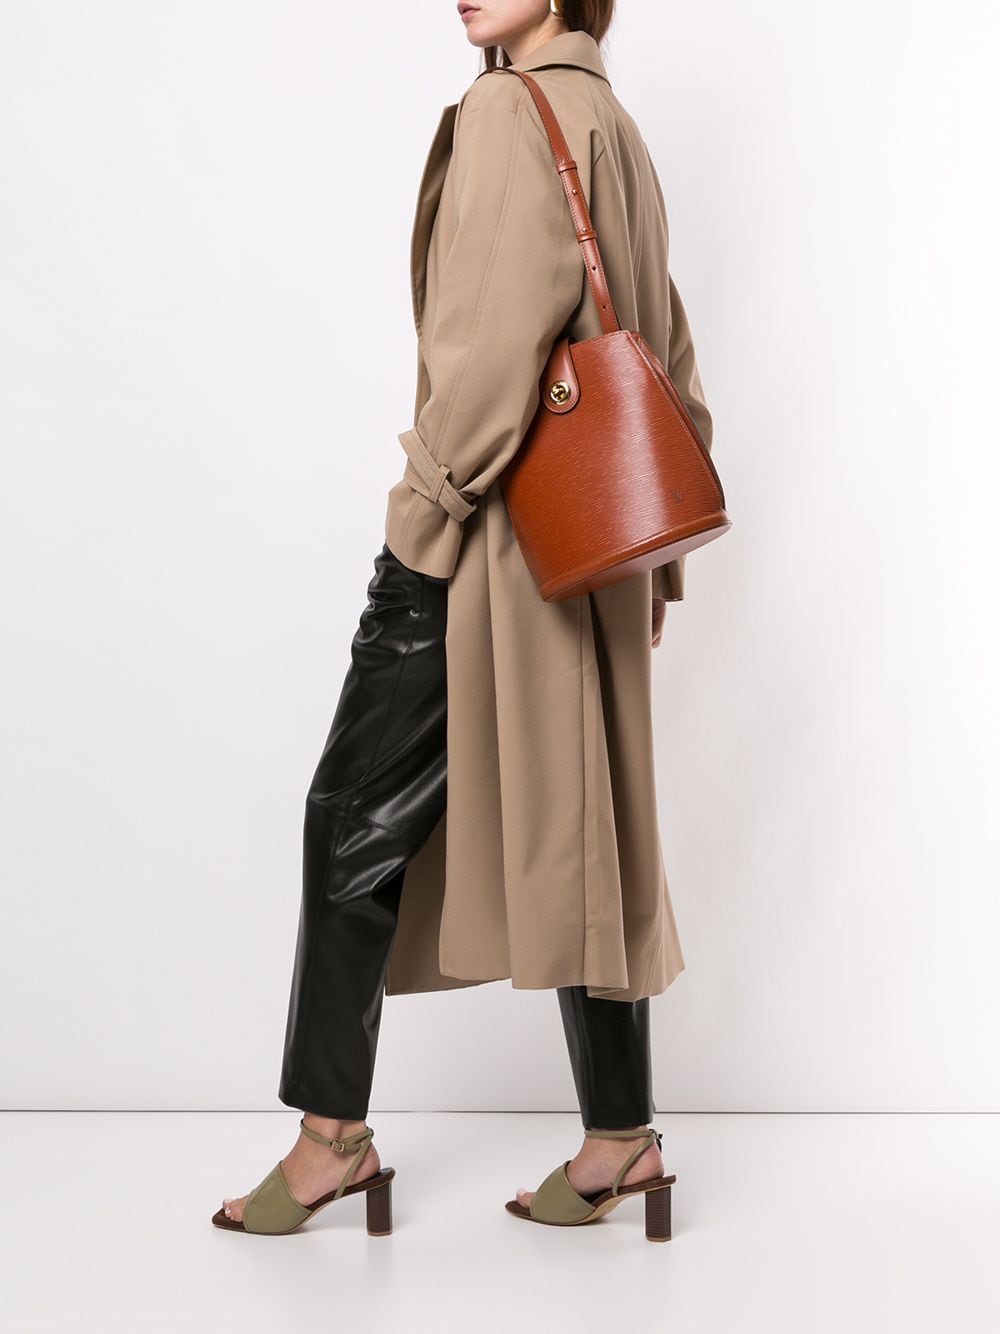 Louis Vuitton Fawn Epi Leather CLUNY Bucket Bag